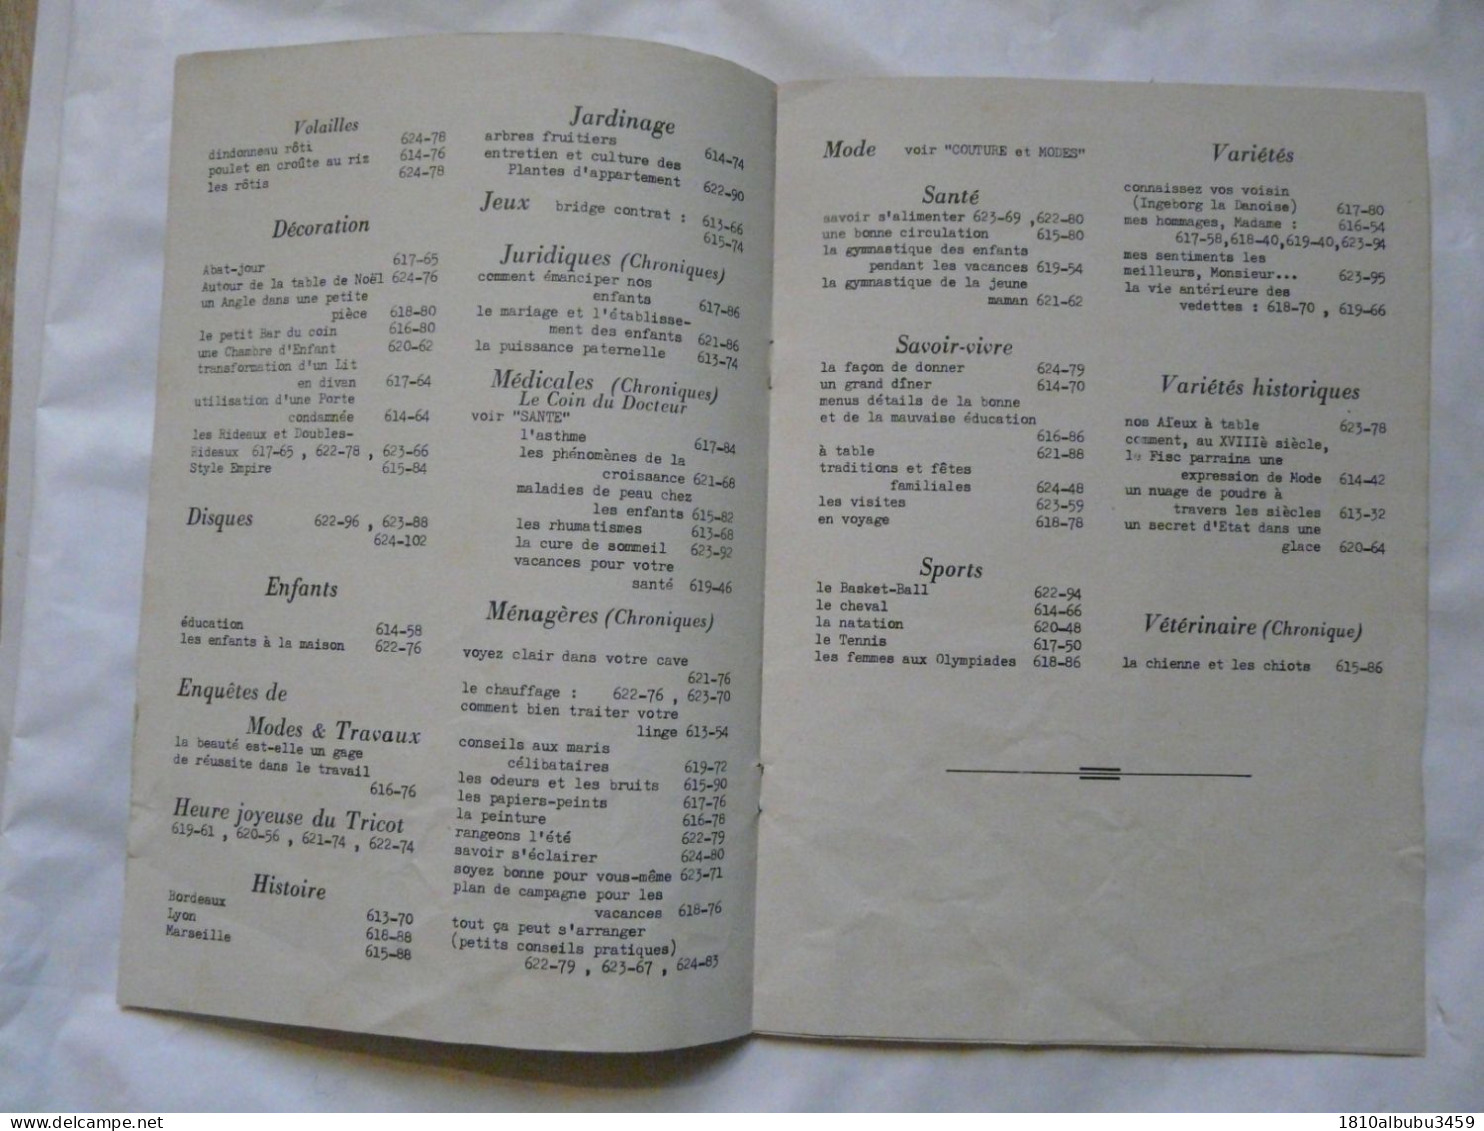 TABLE ANALYTIQUE - MODES ET TRAVAUX 1952 - Mode